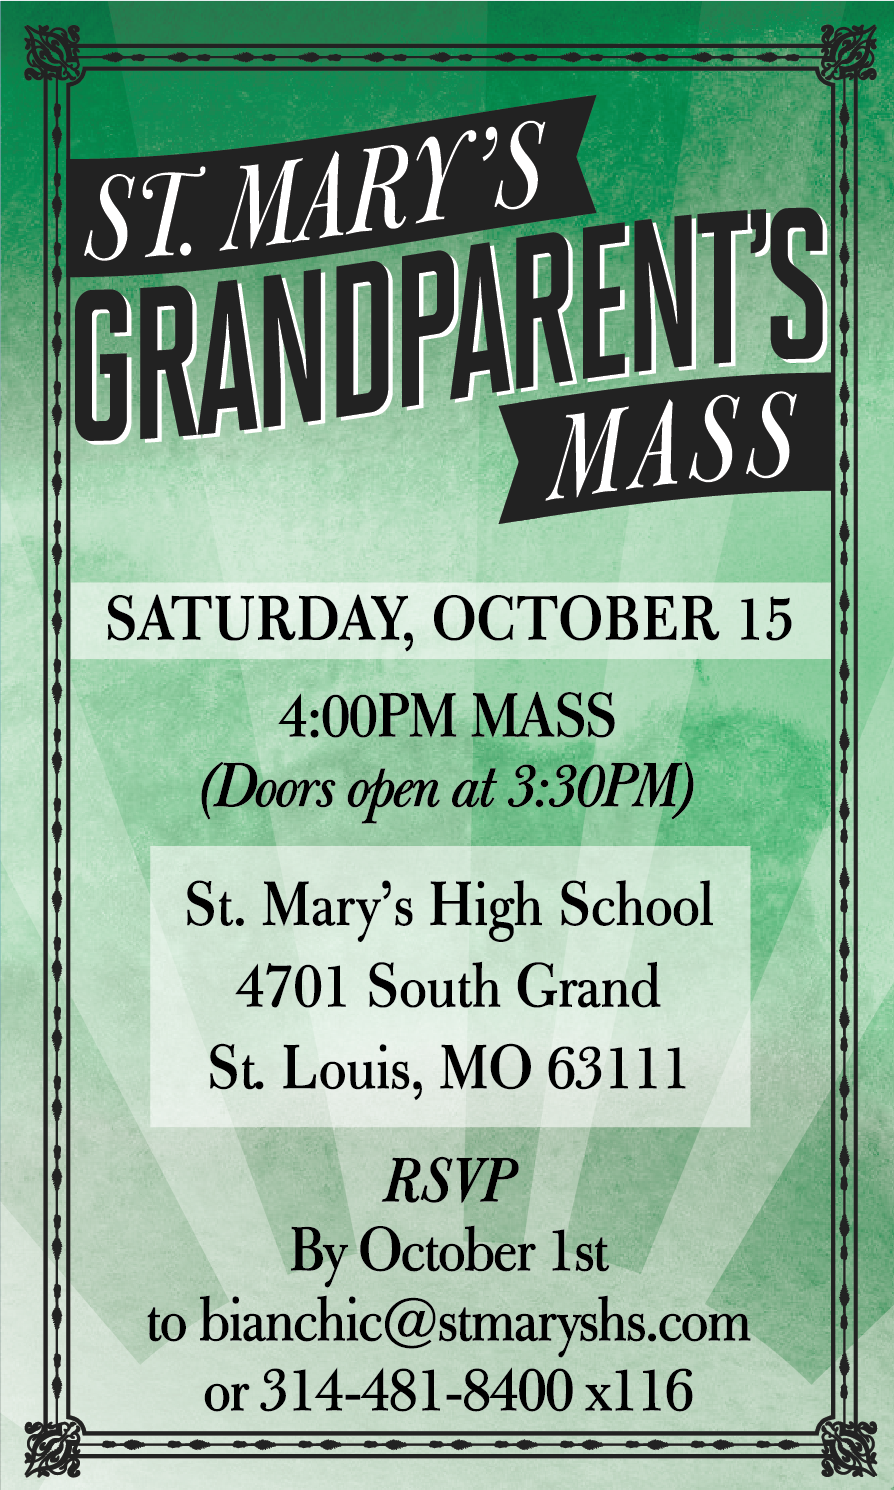 Grandparents Mass: October 15 at 4PM